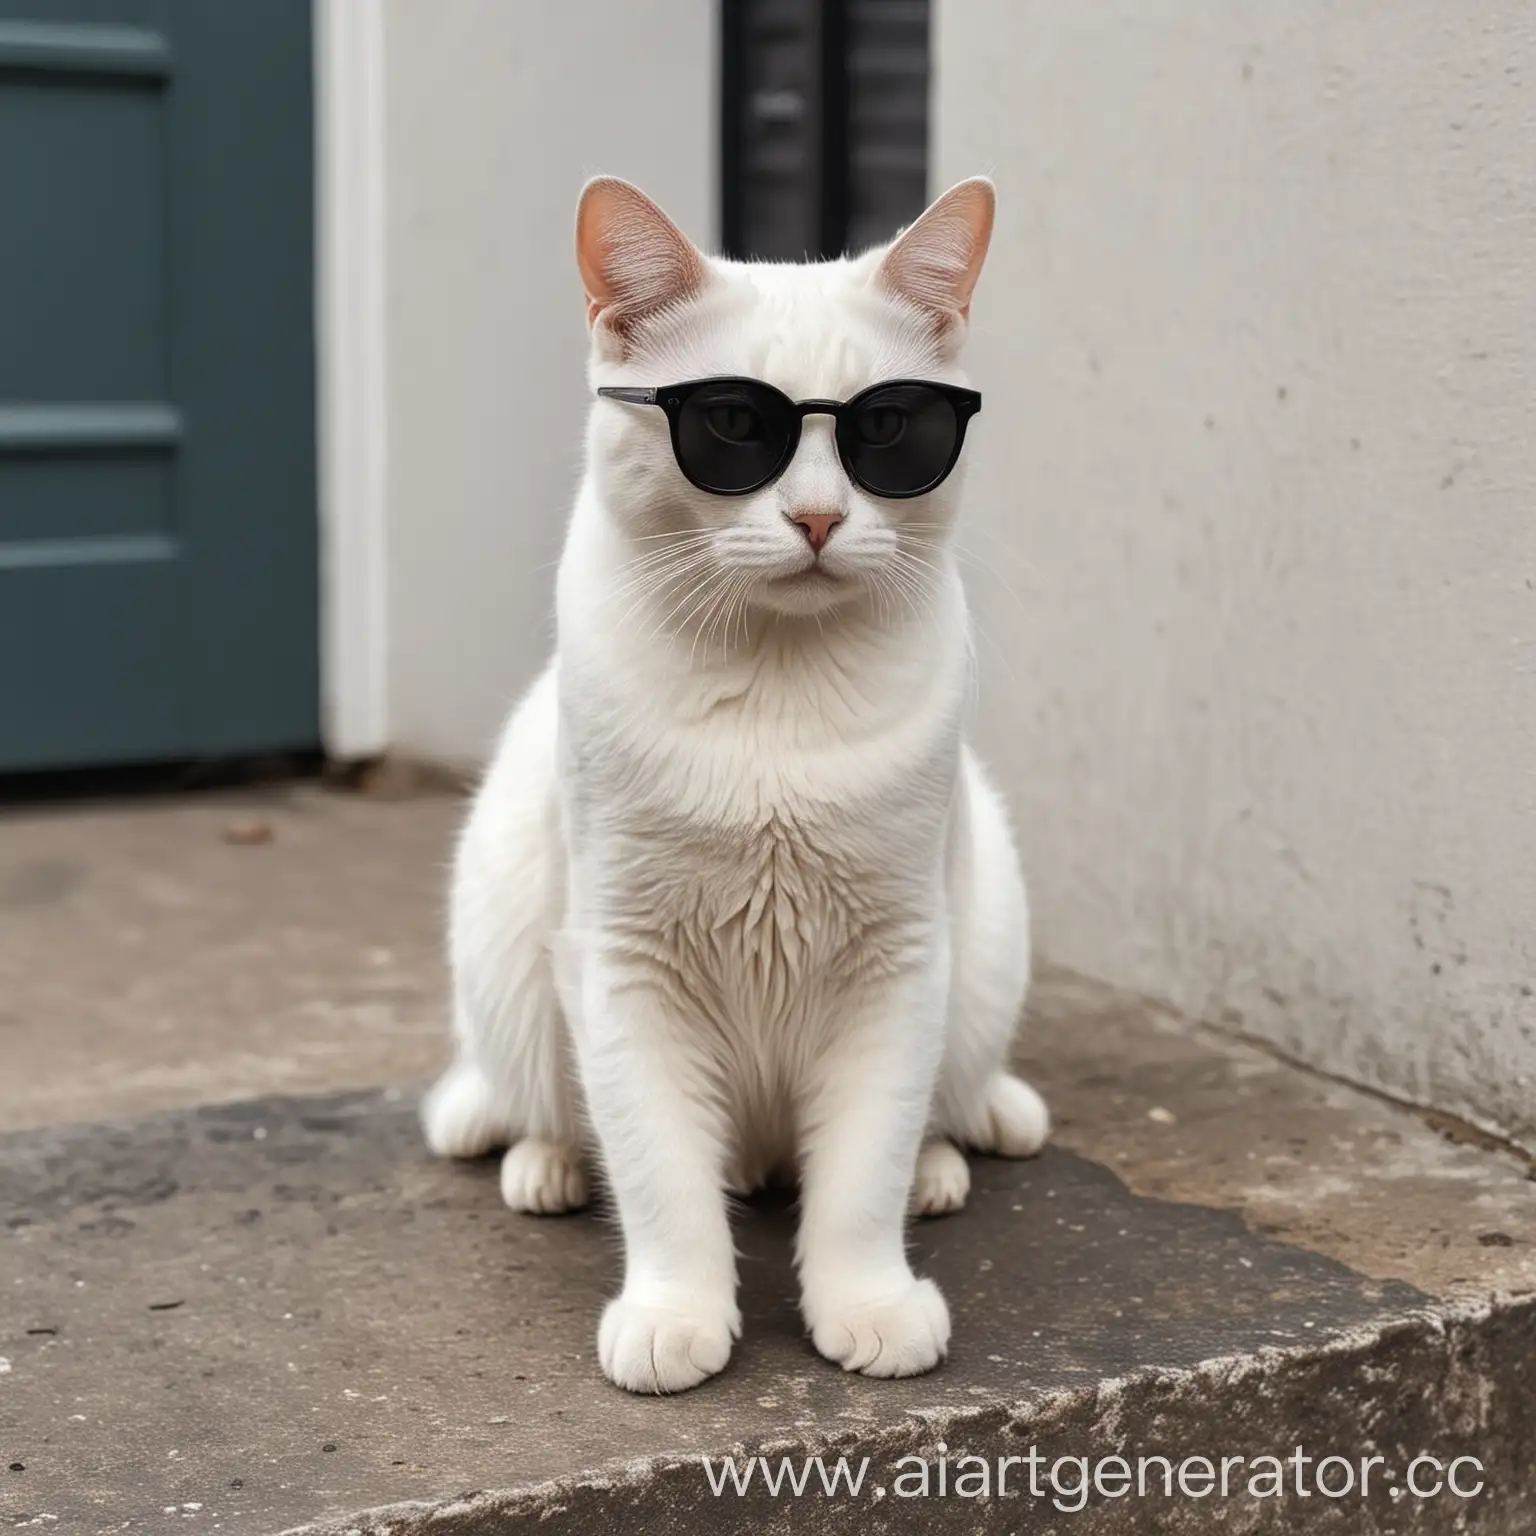 Sophisticated-Cat-Wearing-Black-Glasses-Sitting-on-Steps